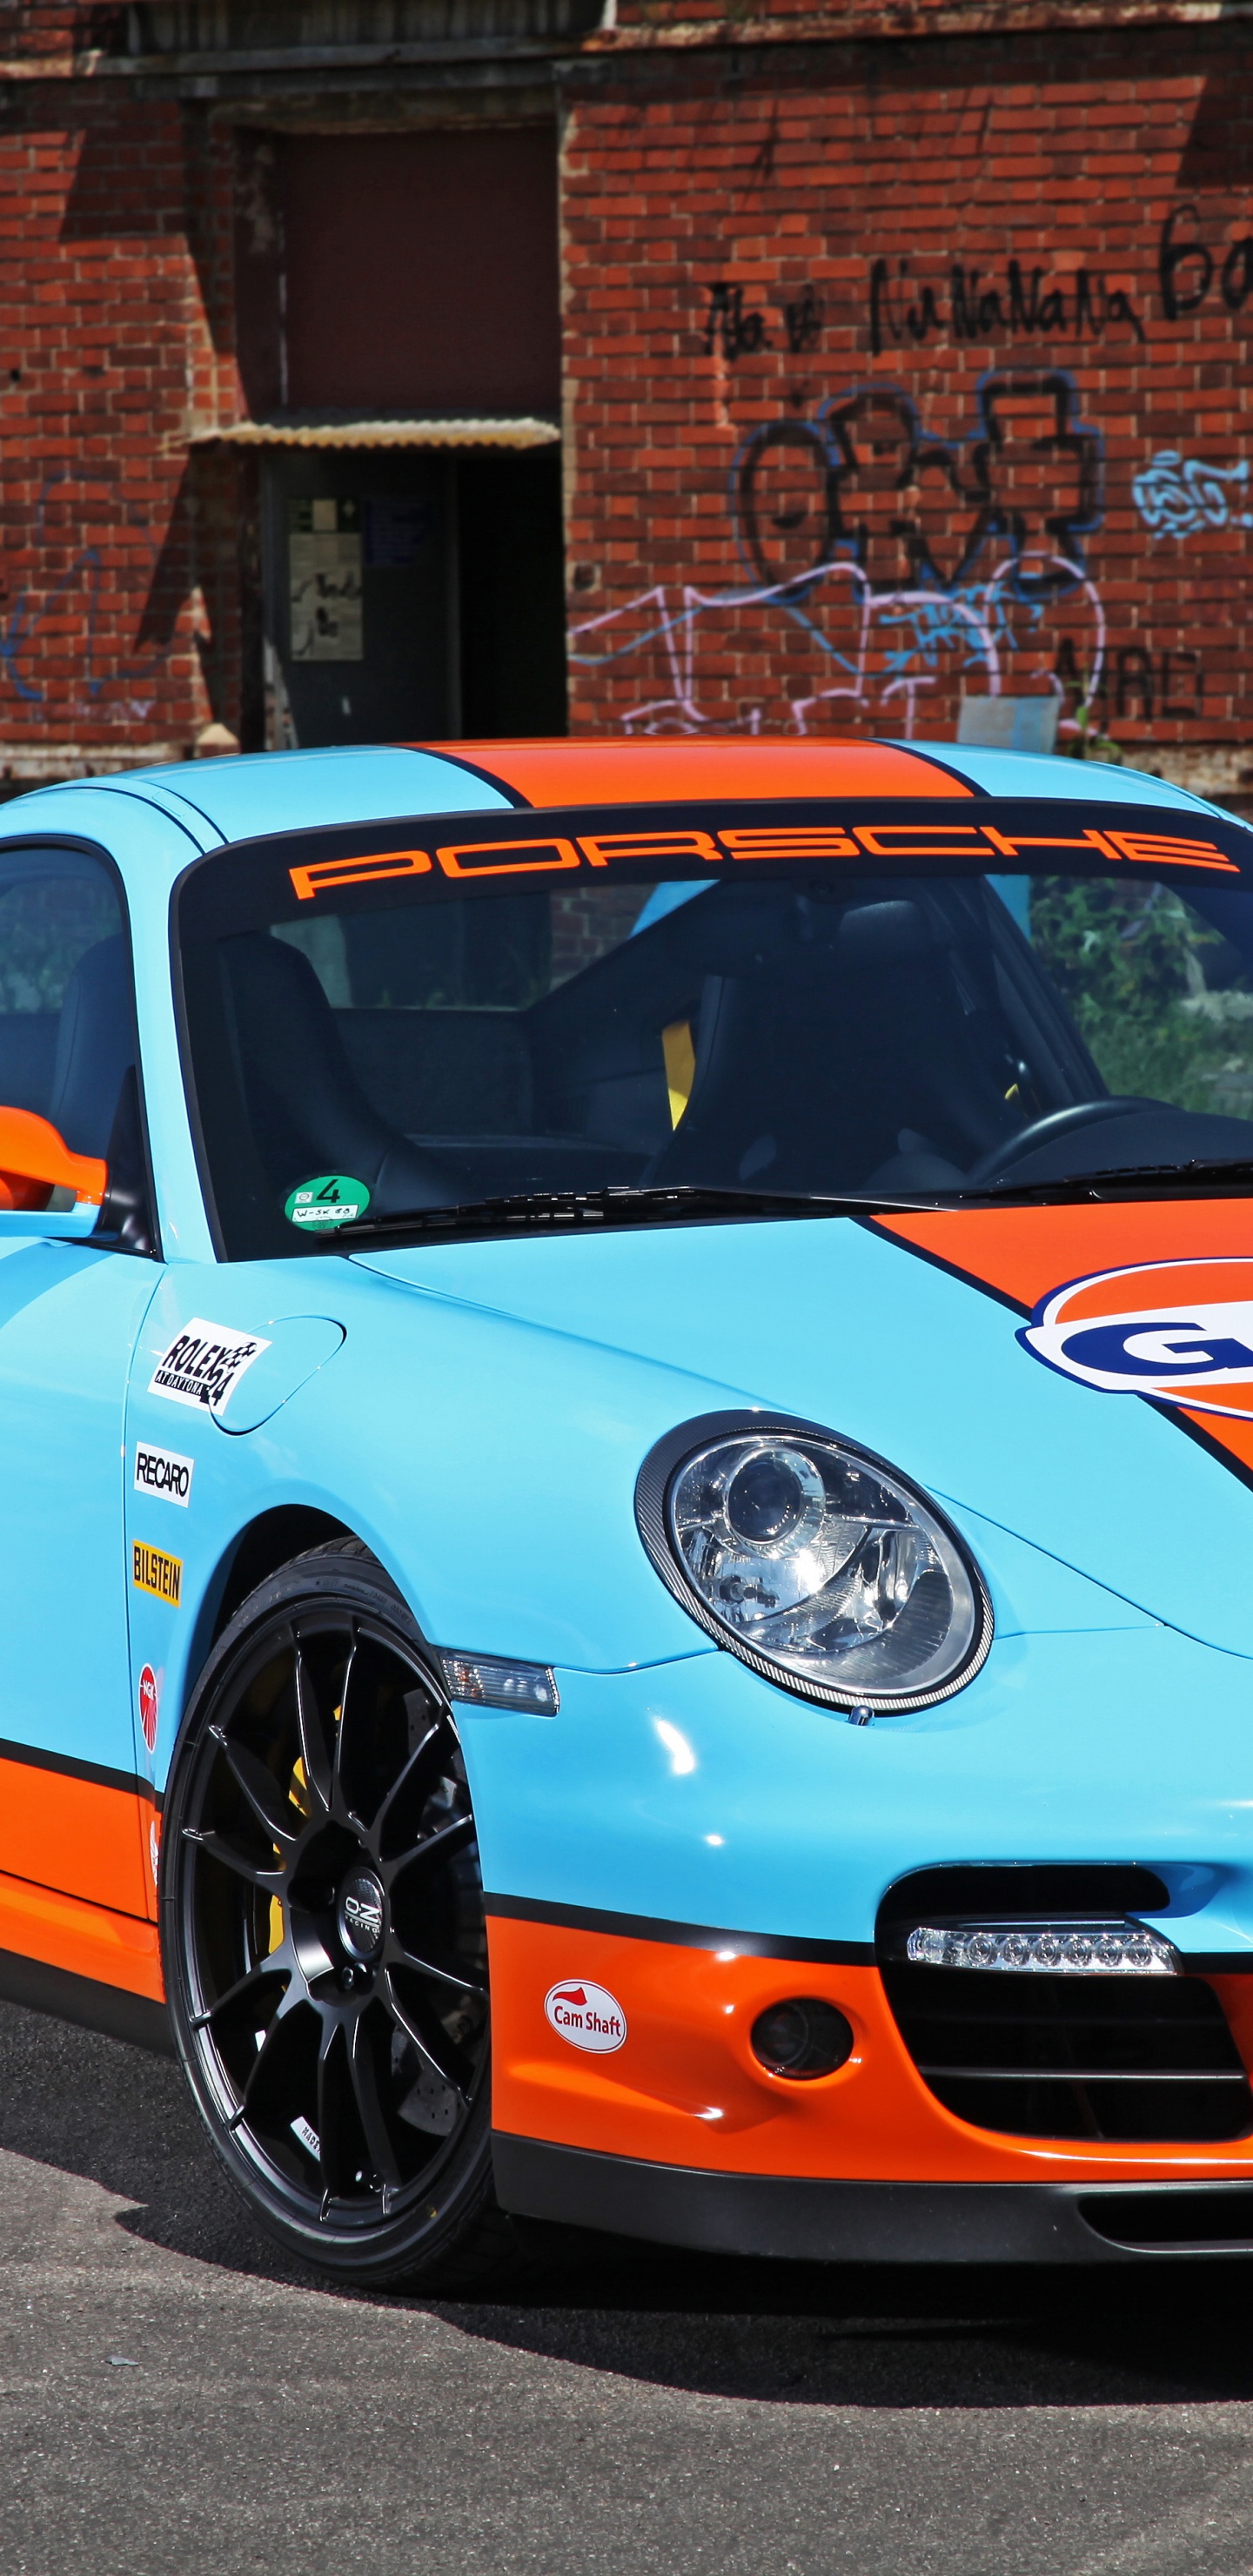 Blue and White Porsche 911 Parked Near Brown Brick Building During Daytime. Wallpaper in 1440x2960 Resolution